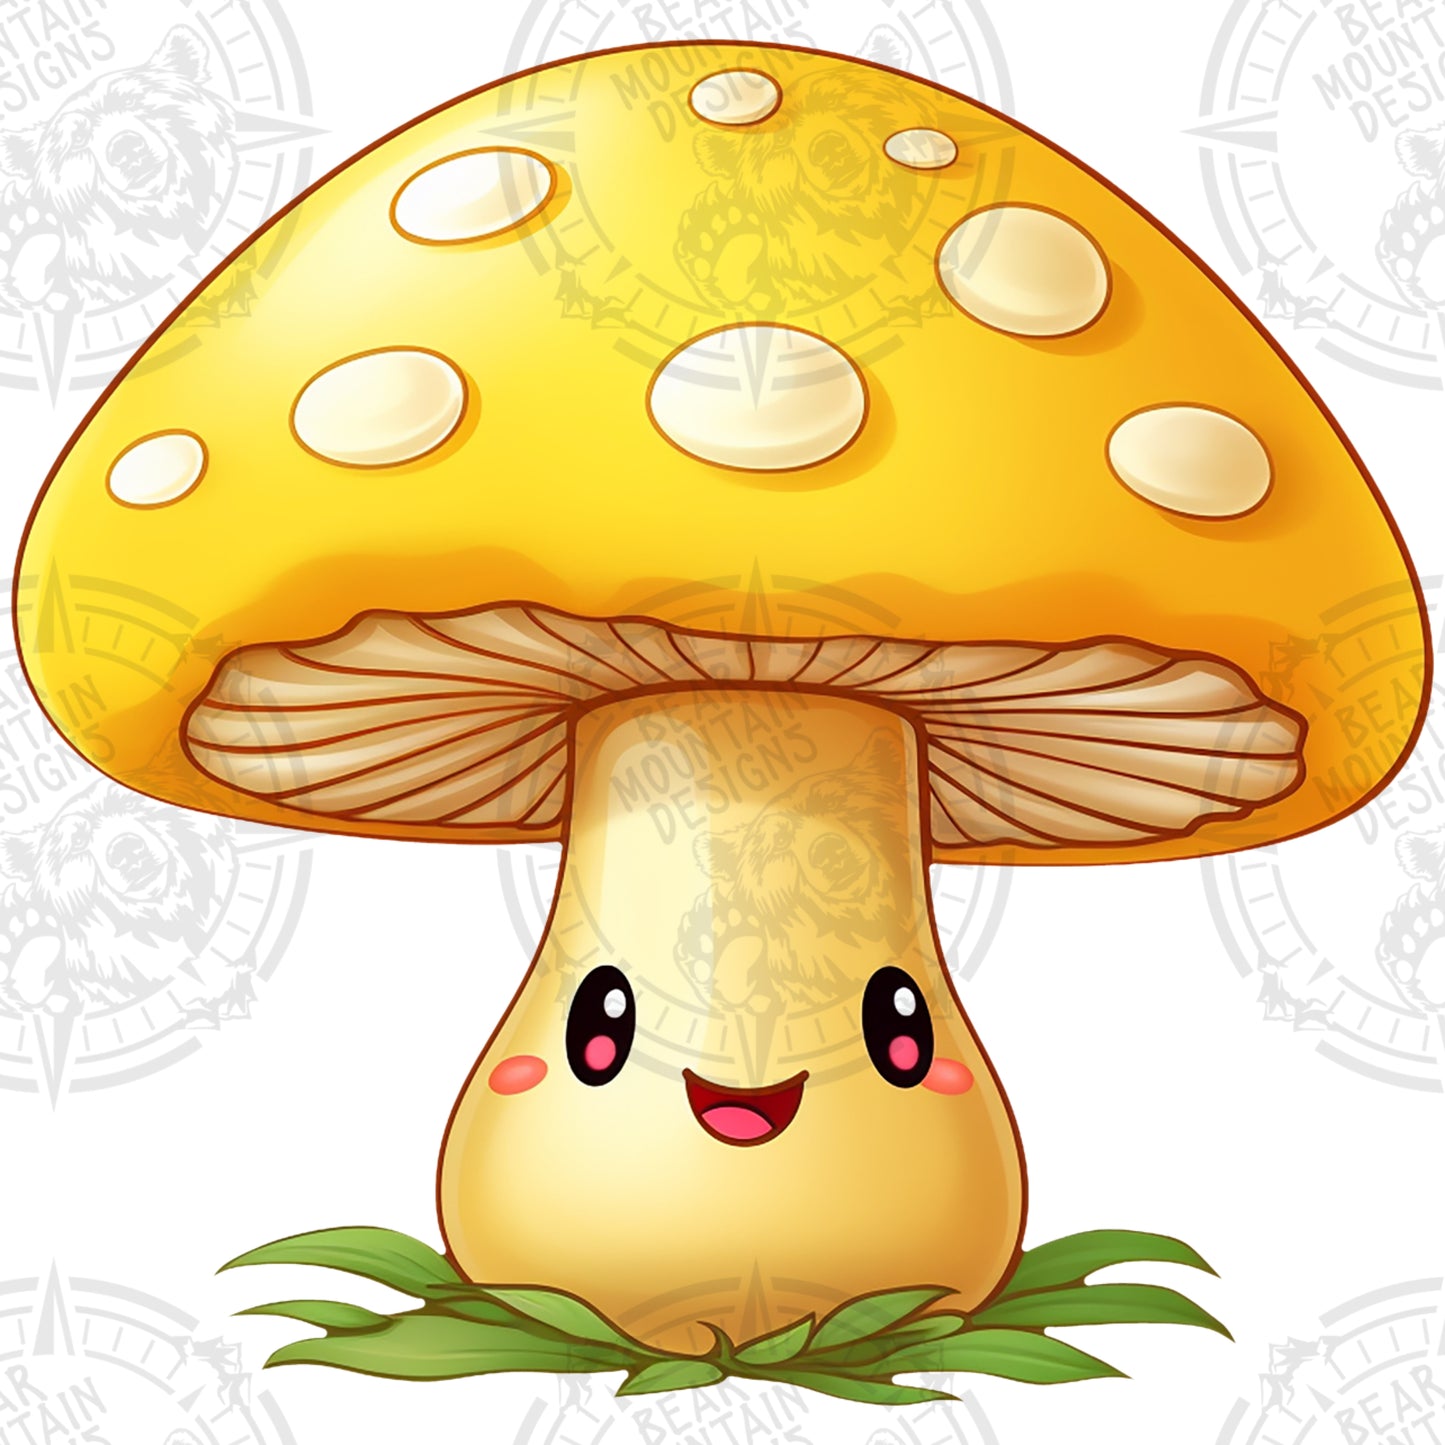 Mushroom Buddy 11